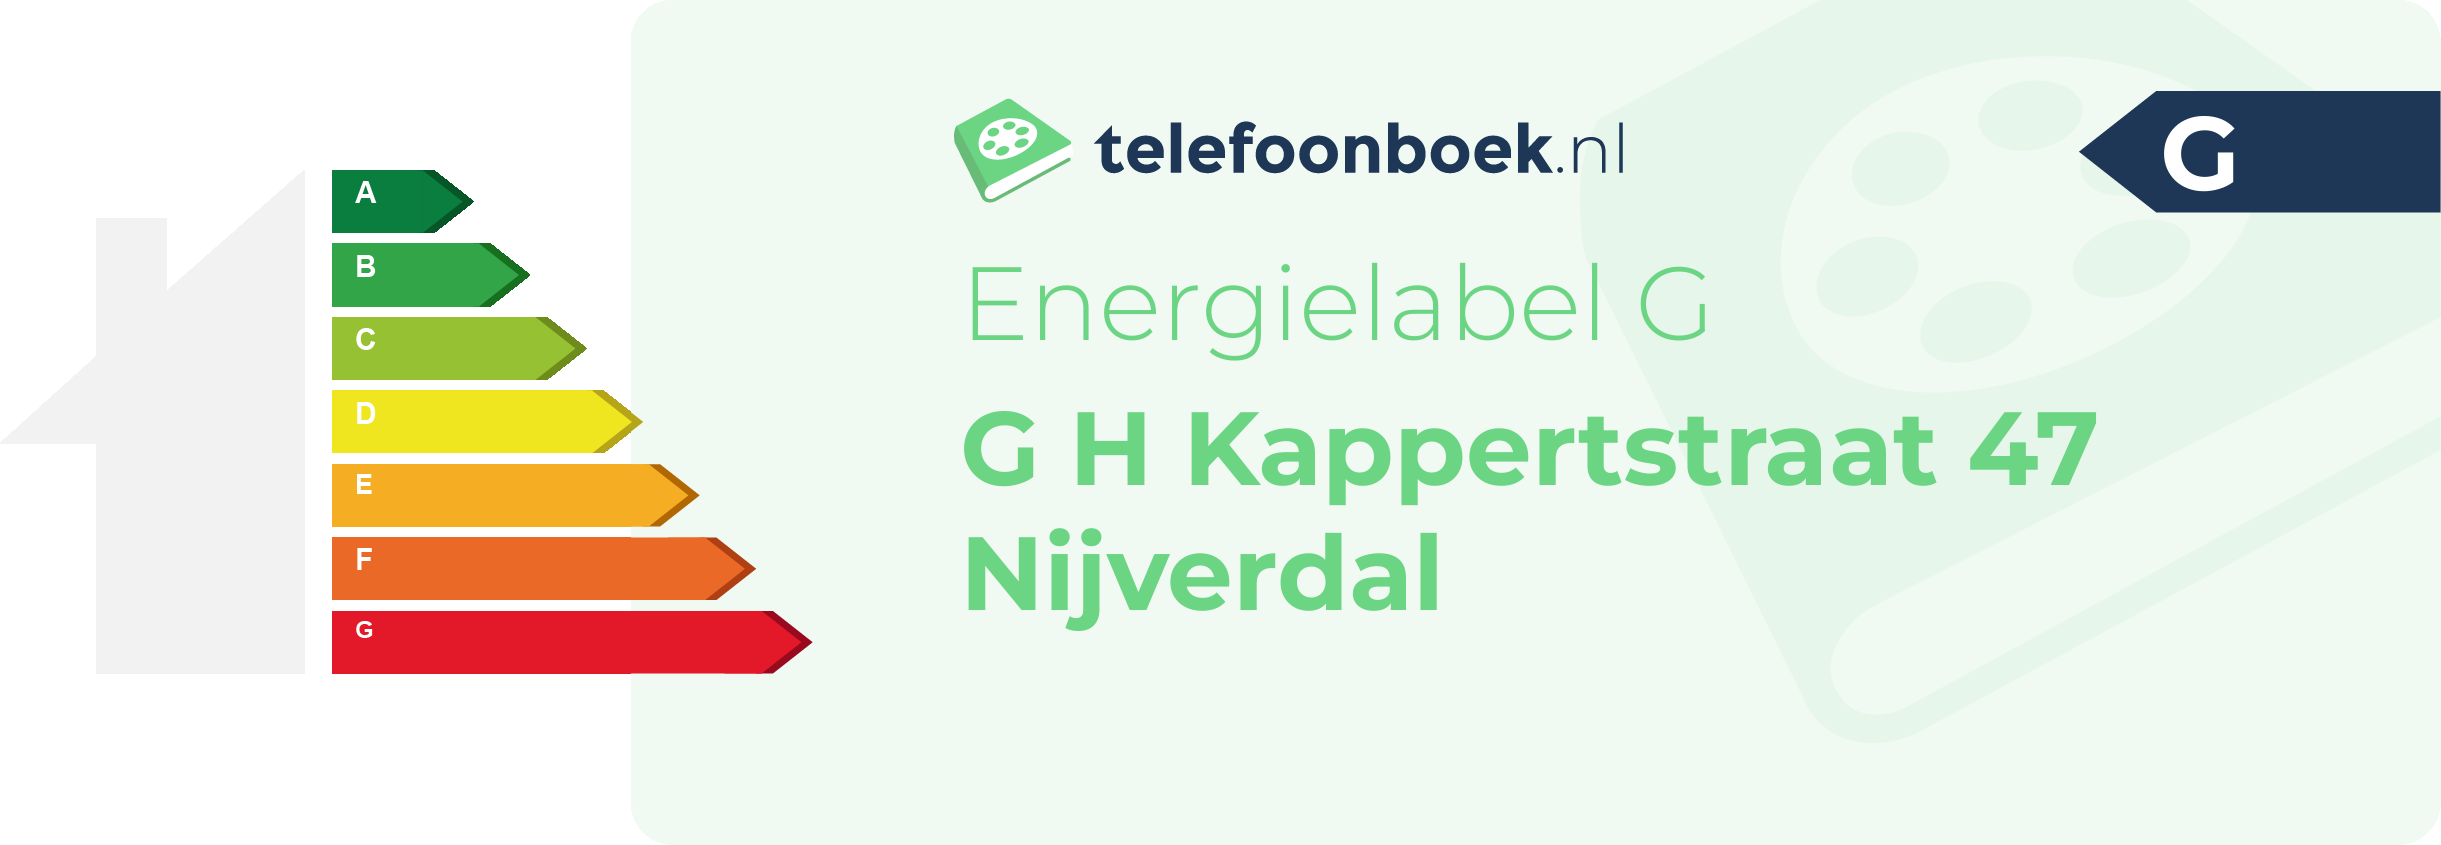 Energielabel G H Kappertstraat 47 Nijverdal